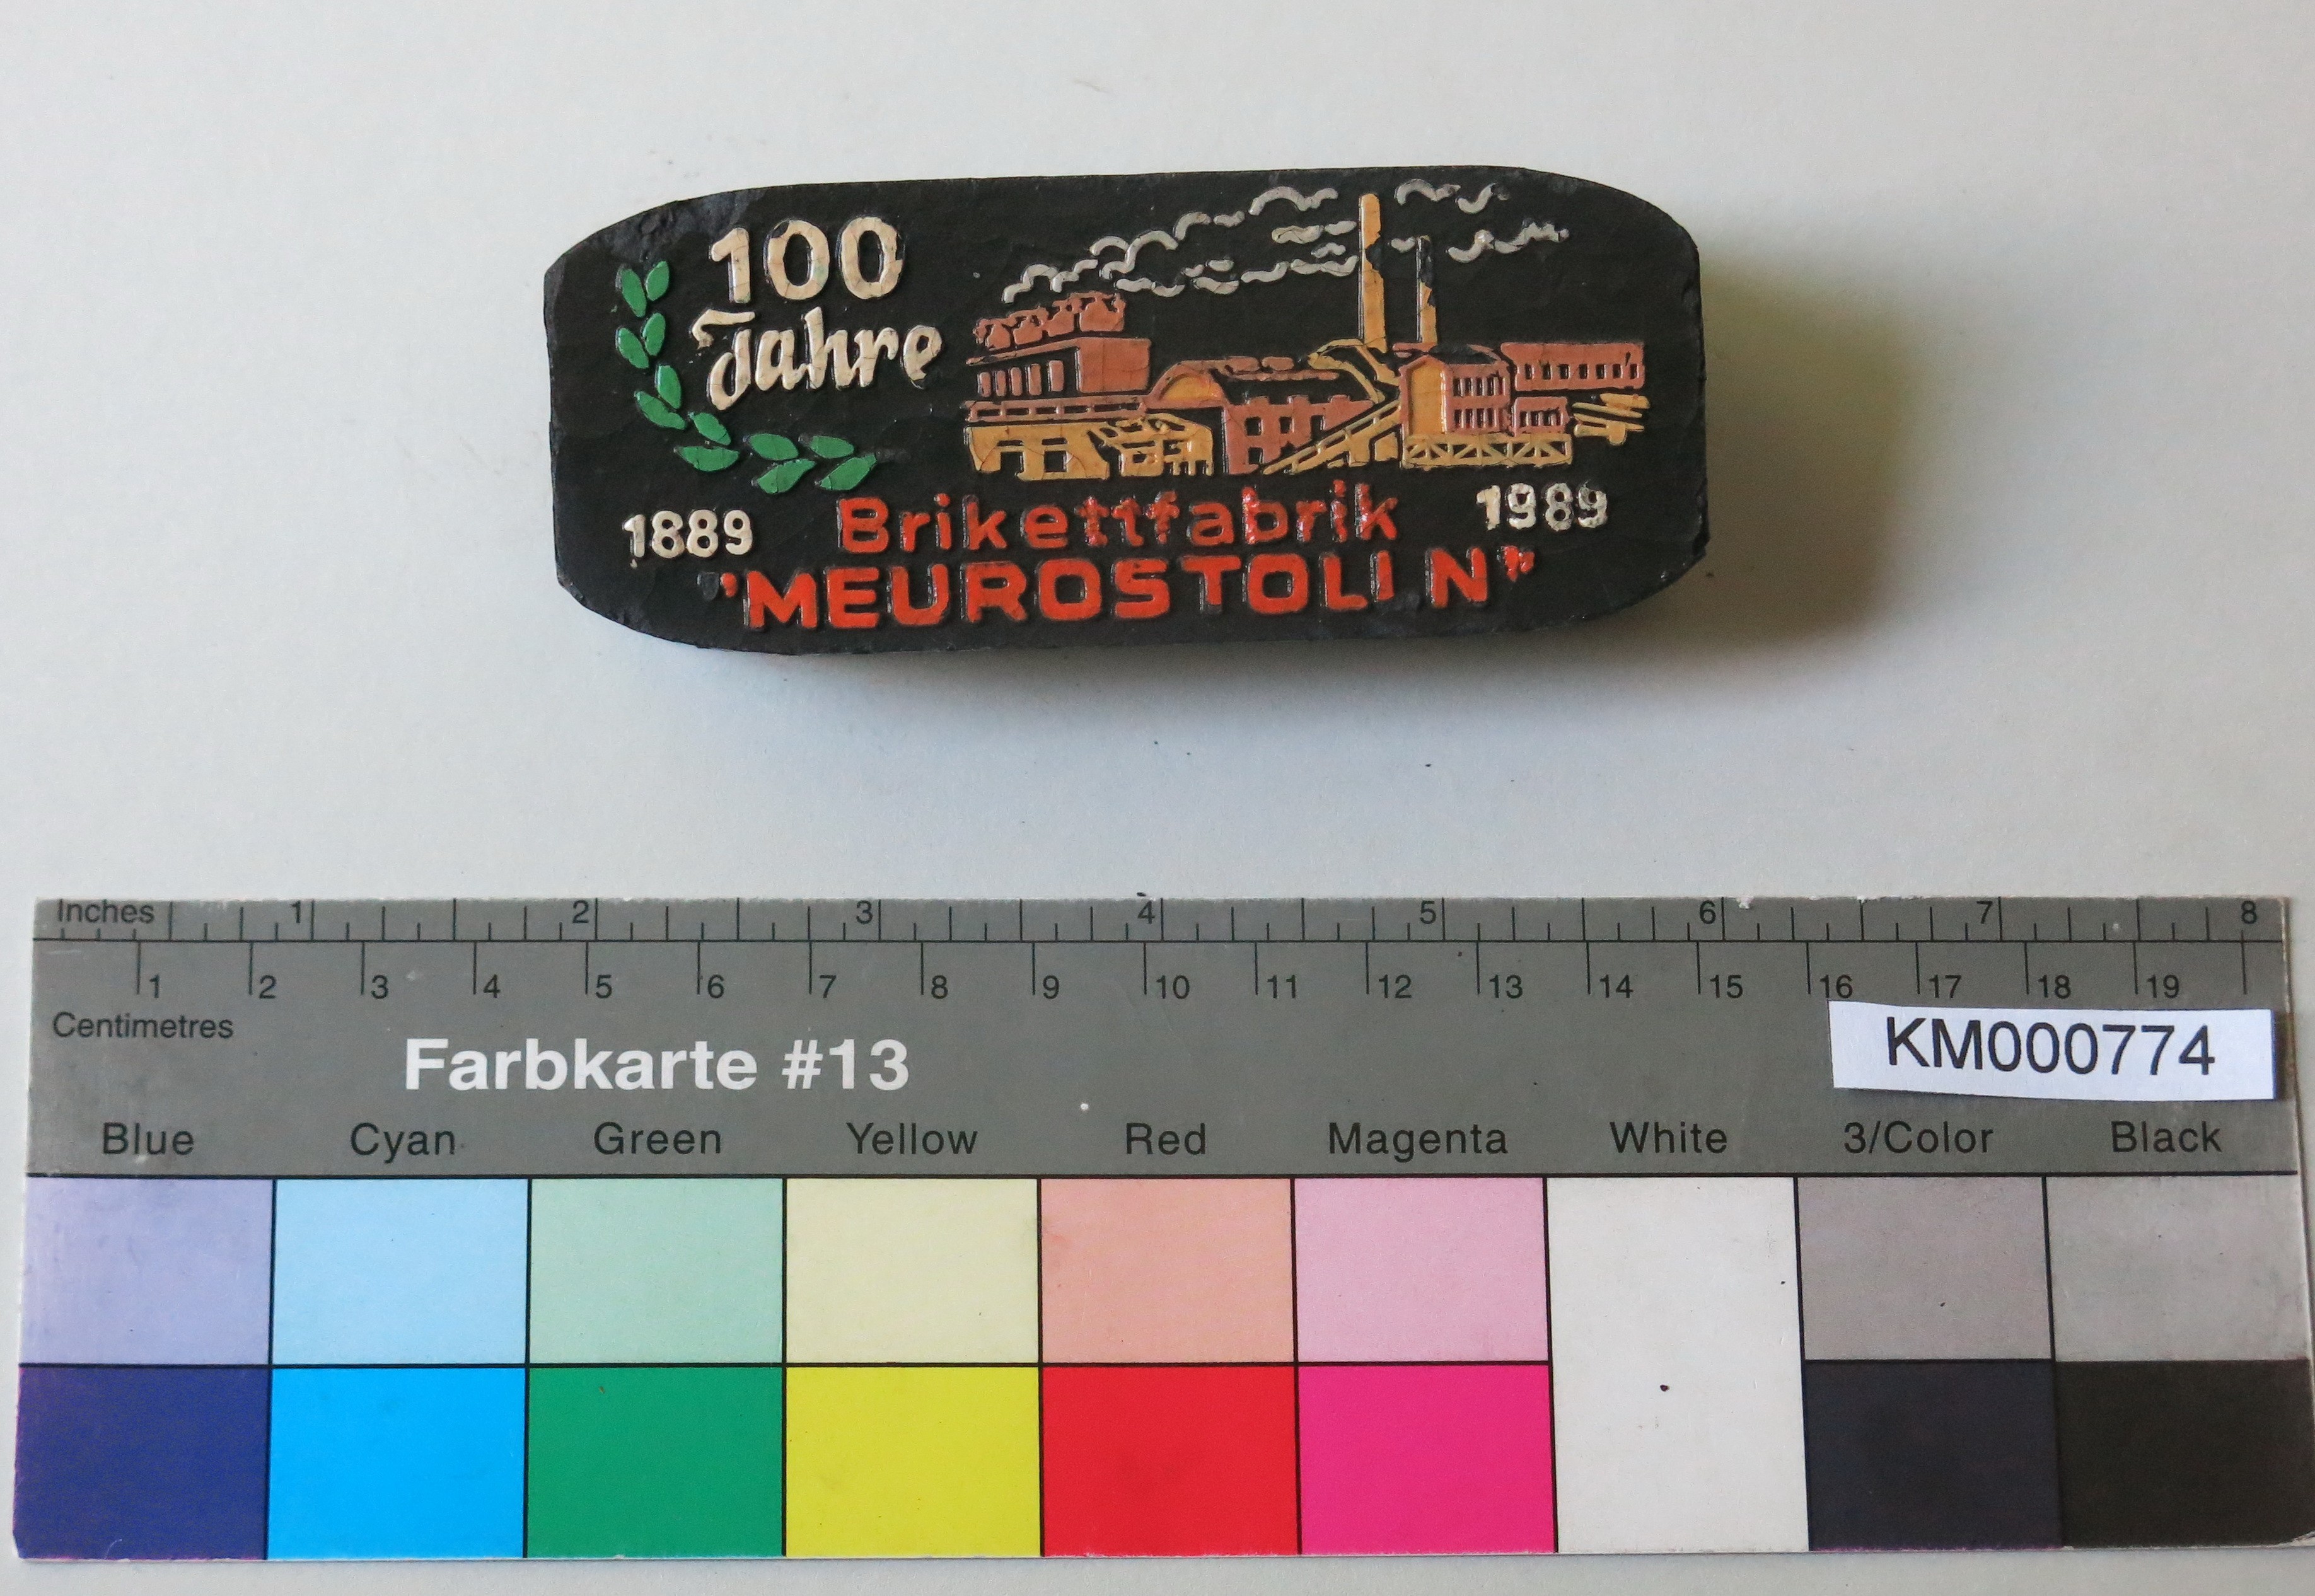 Zierbrikett "100 Jahre Brikettfabrik MEUROSTOLLN 1889 1989" (Energiefabrik Knappenrode CC BY-SA)